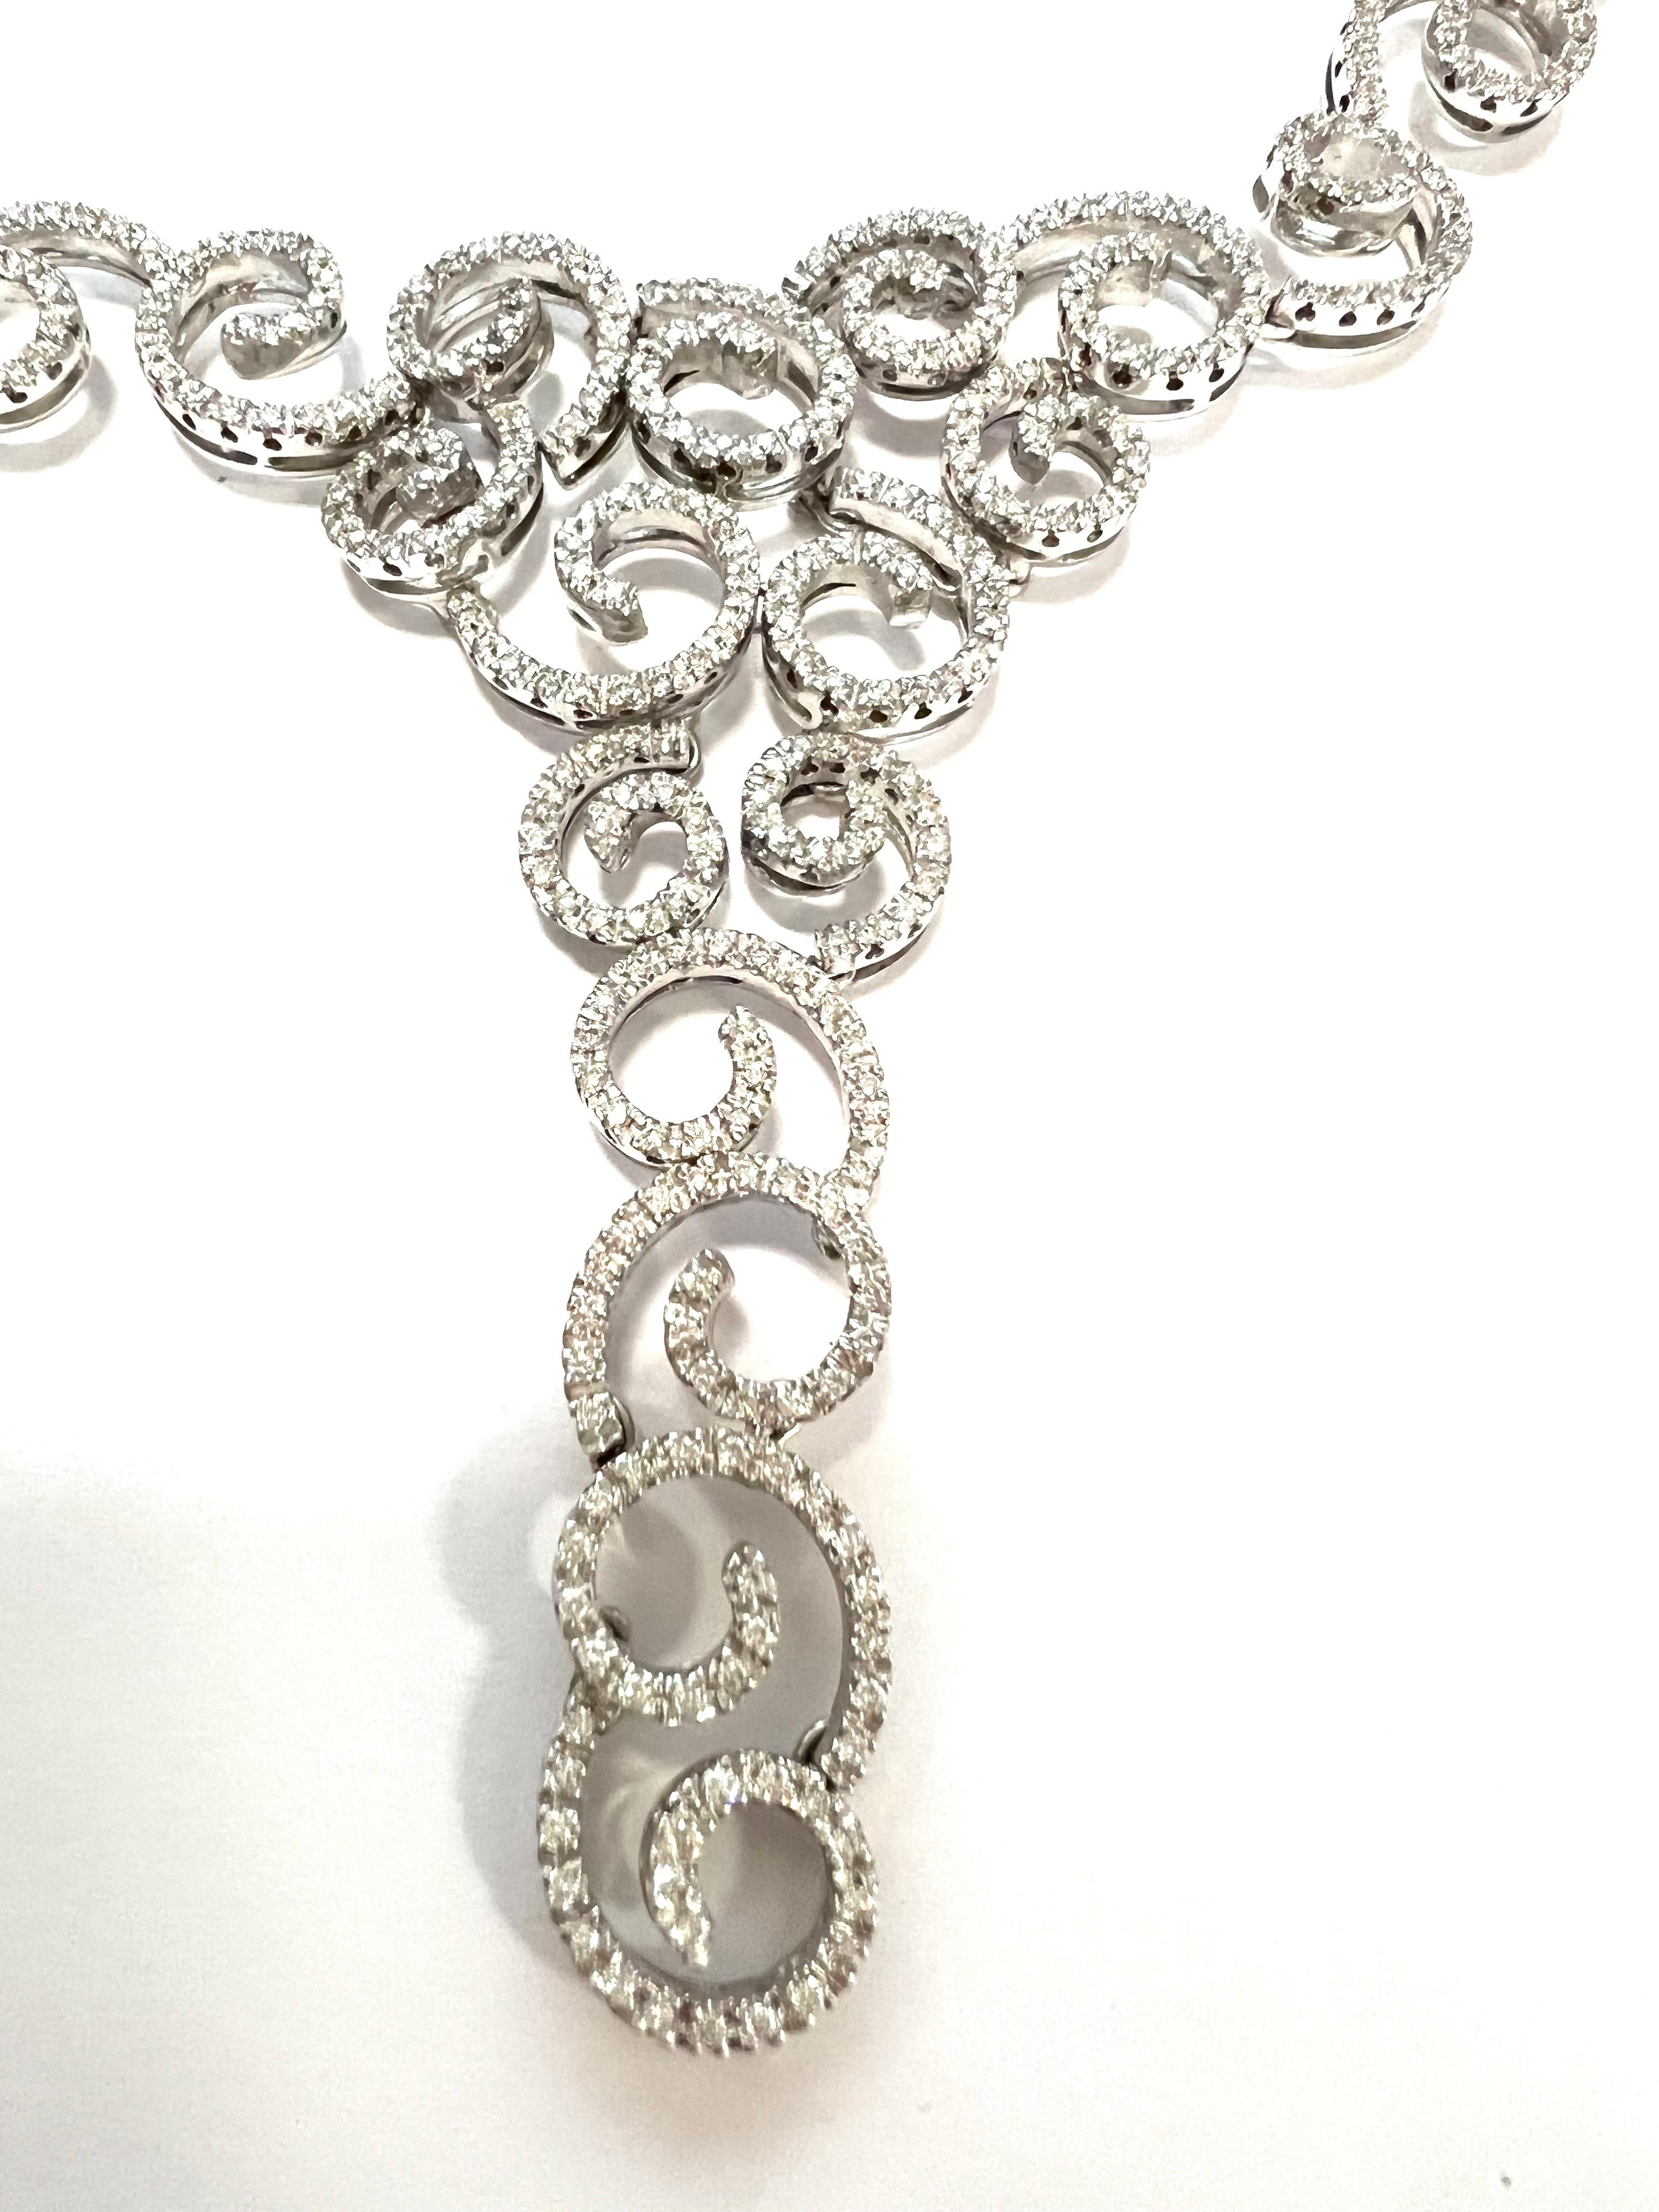 Brilliant Cut 18 Karat White Gold and White Diamond Necklace For Sale